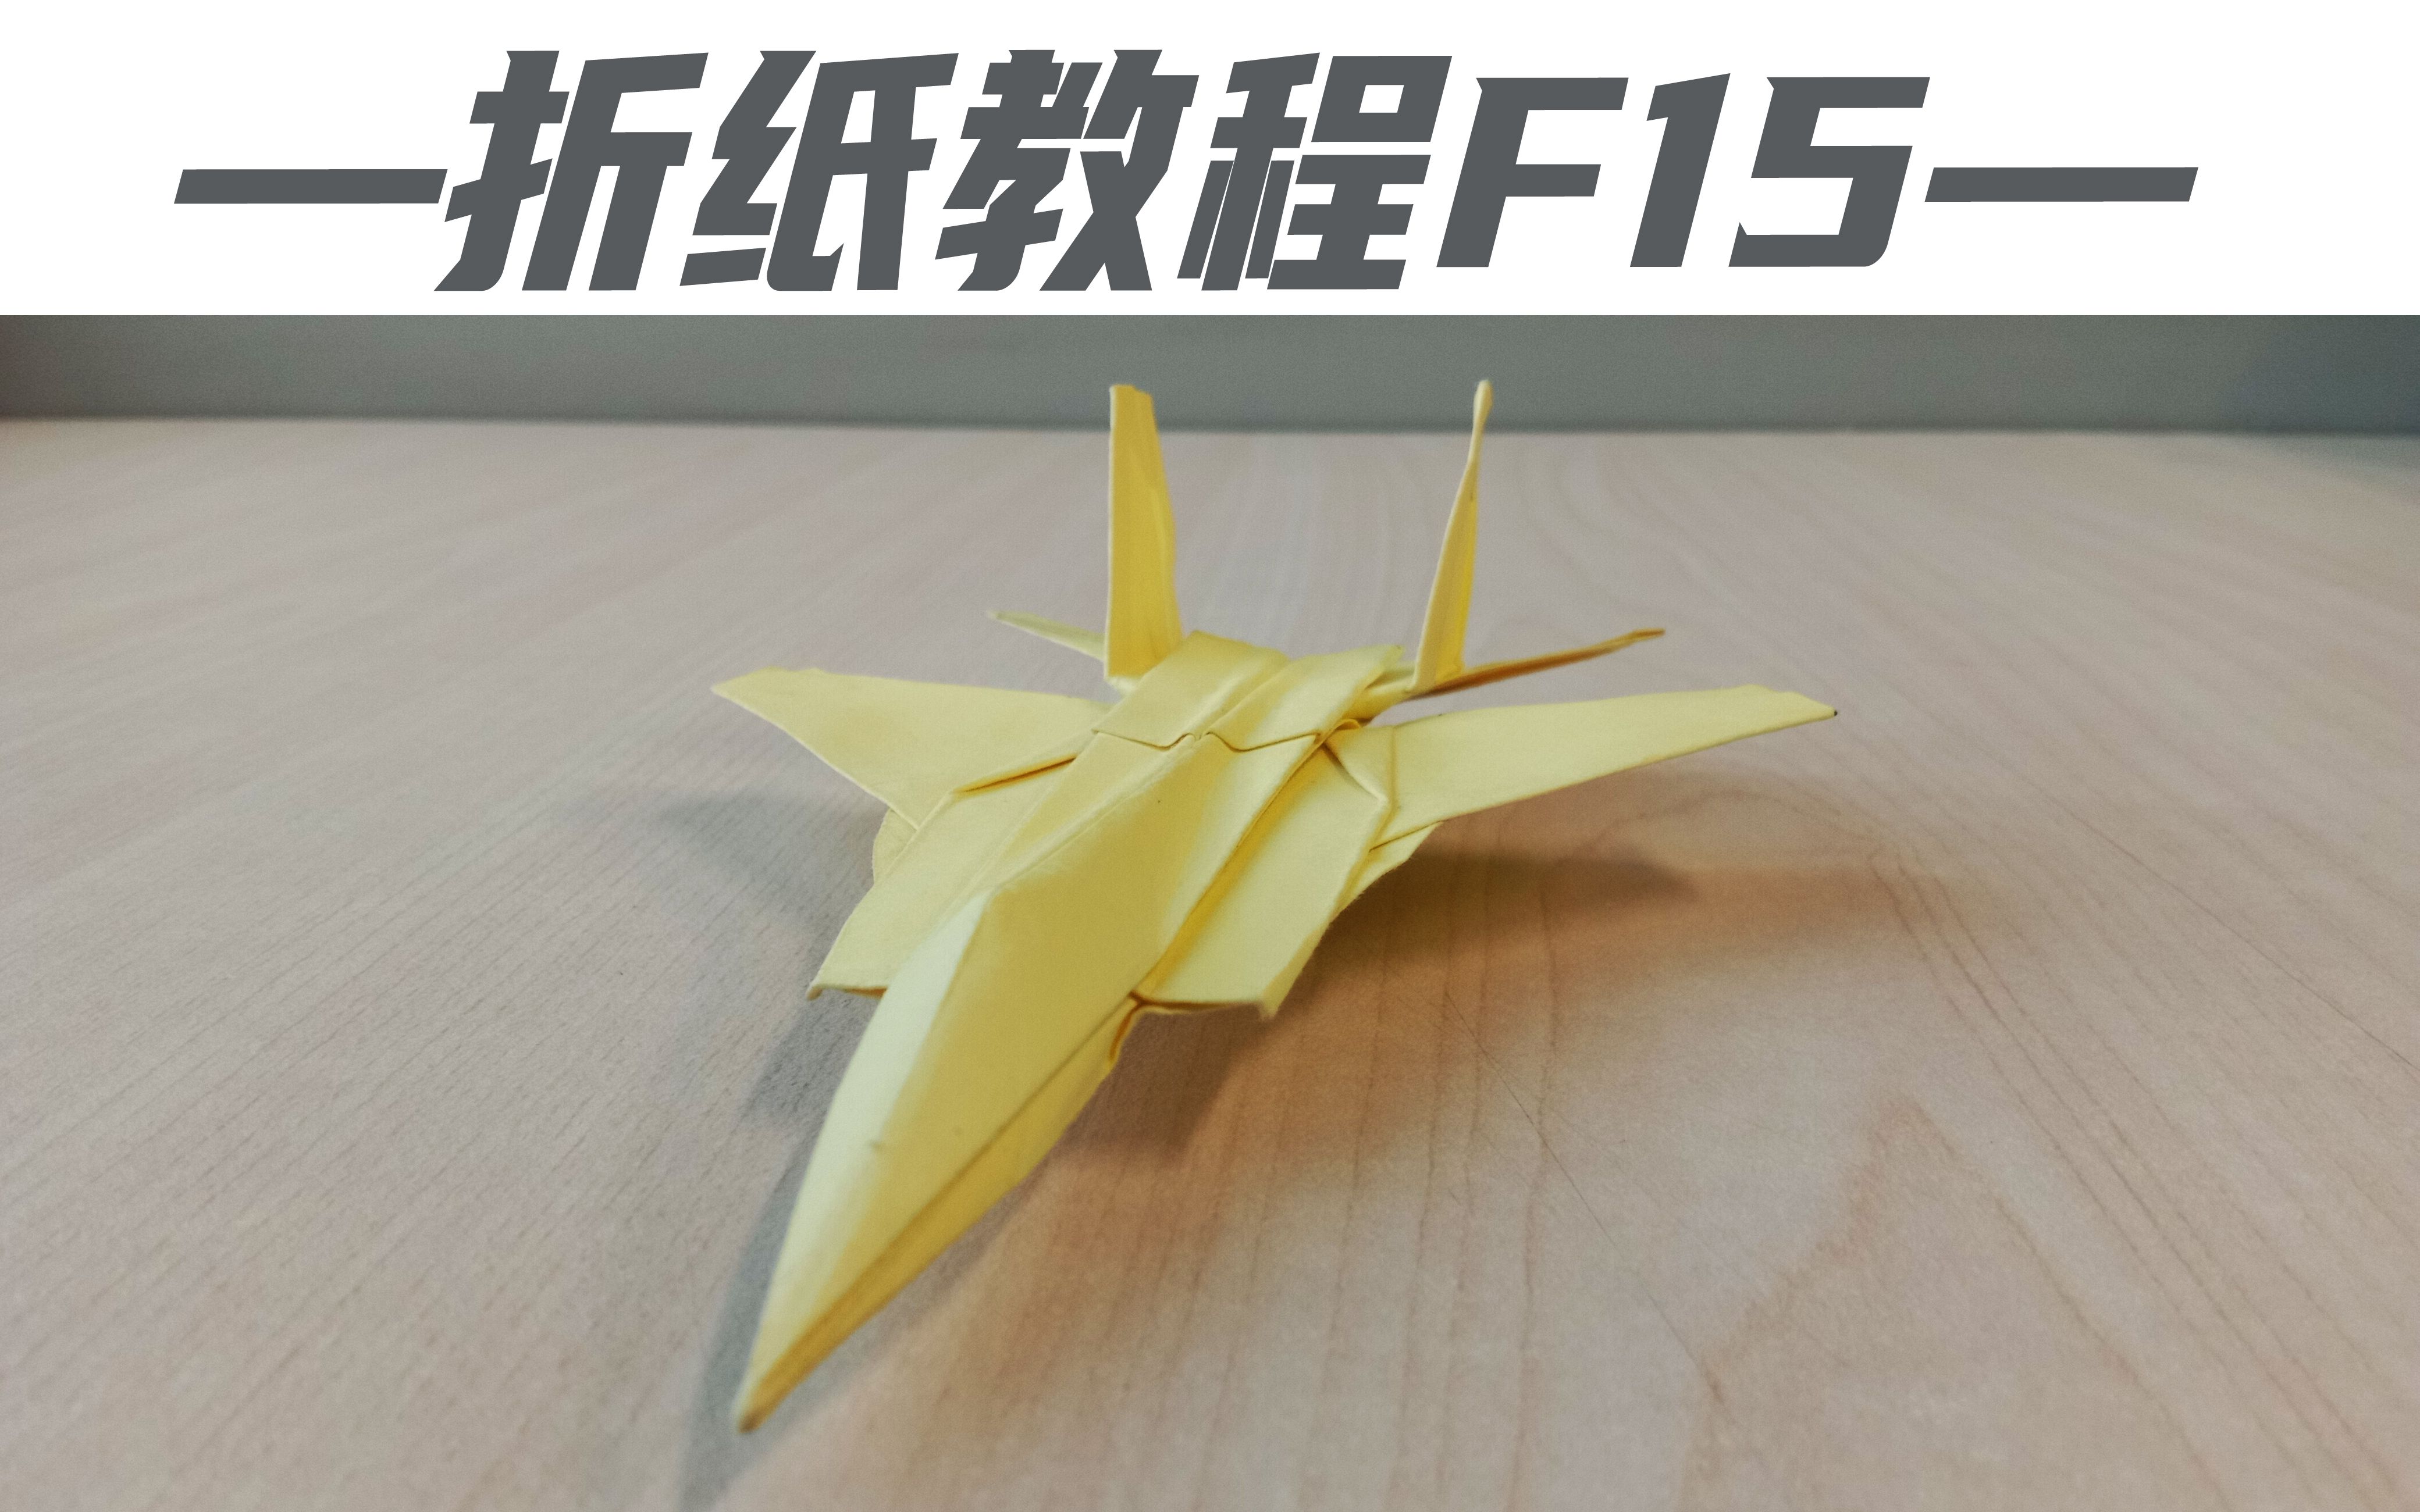 【折纸教程】如何折纸一架幻影2000战斗机3D模型_哔哩哔哩 (゜-゜)つロ 干杯~-bilibili